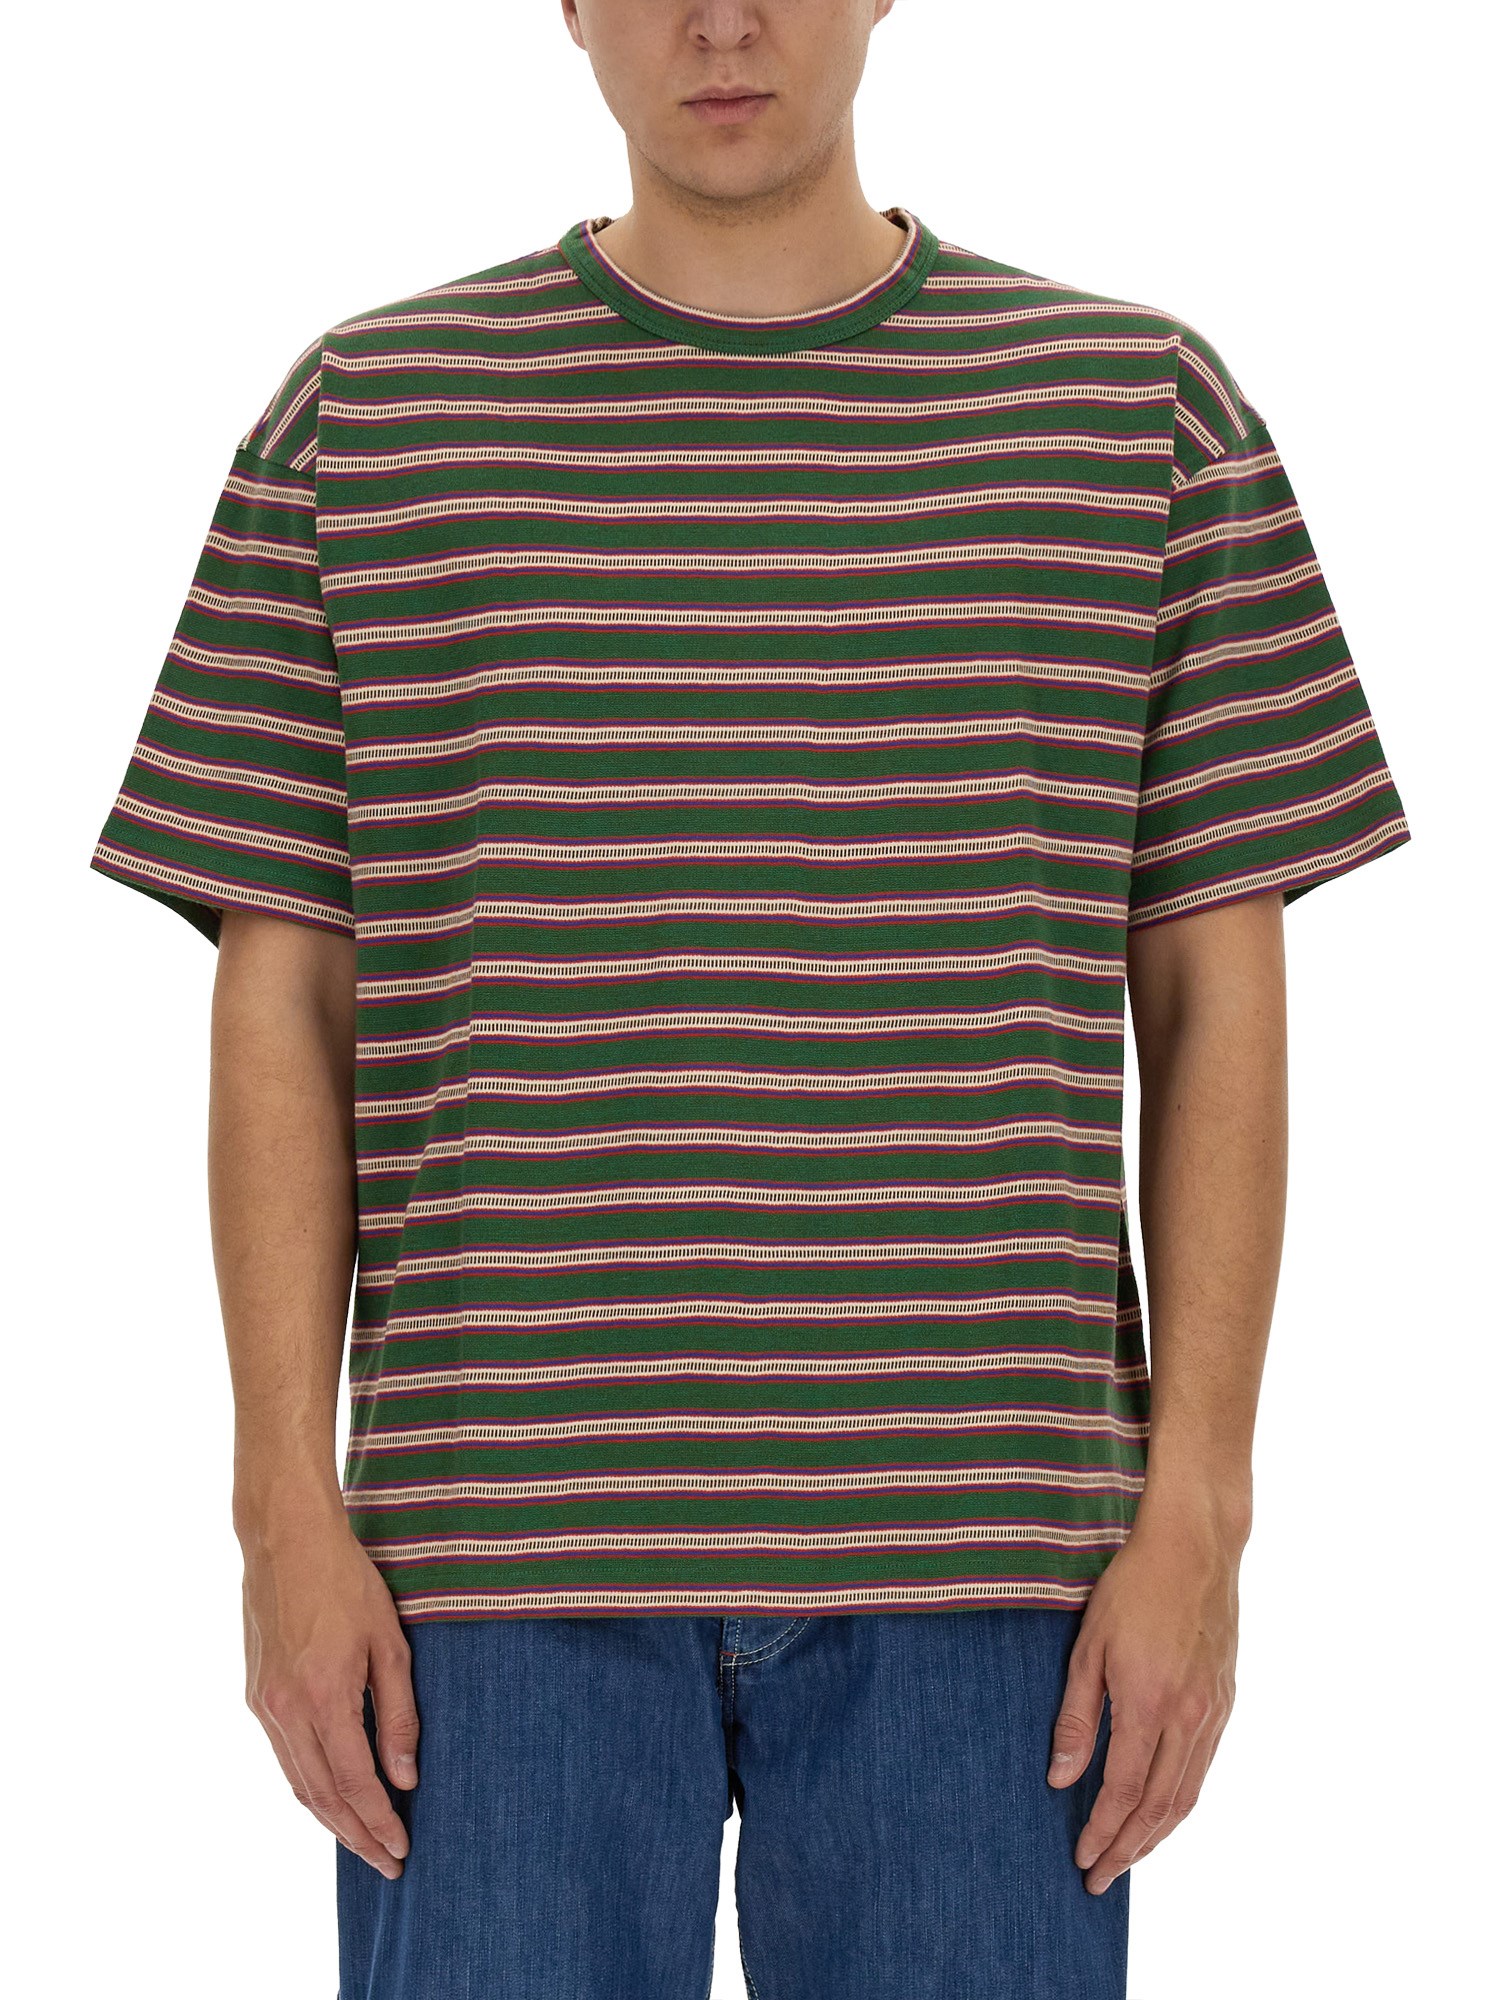 ymc striped t-shirt